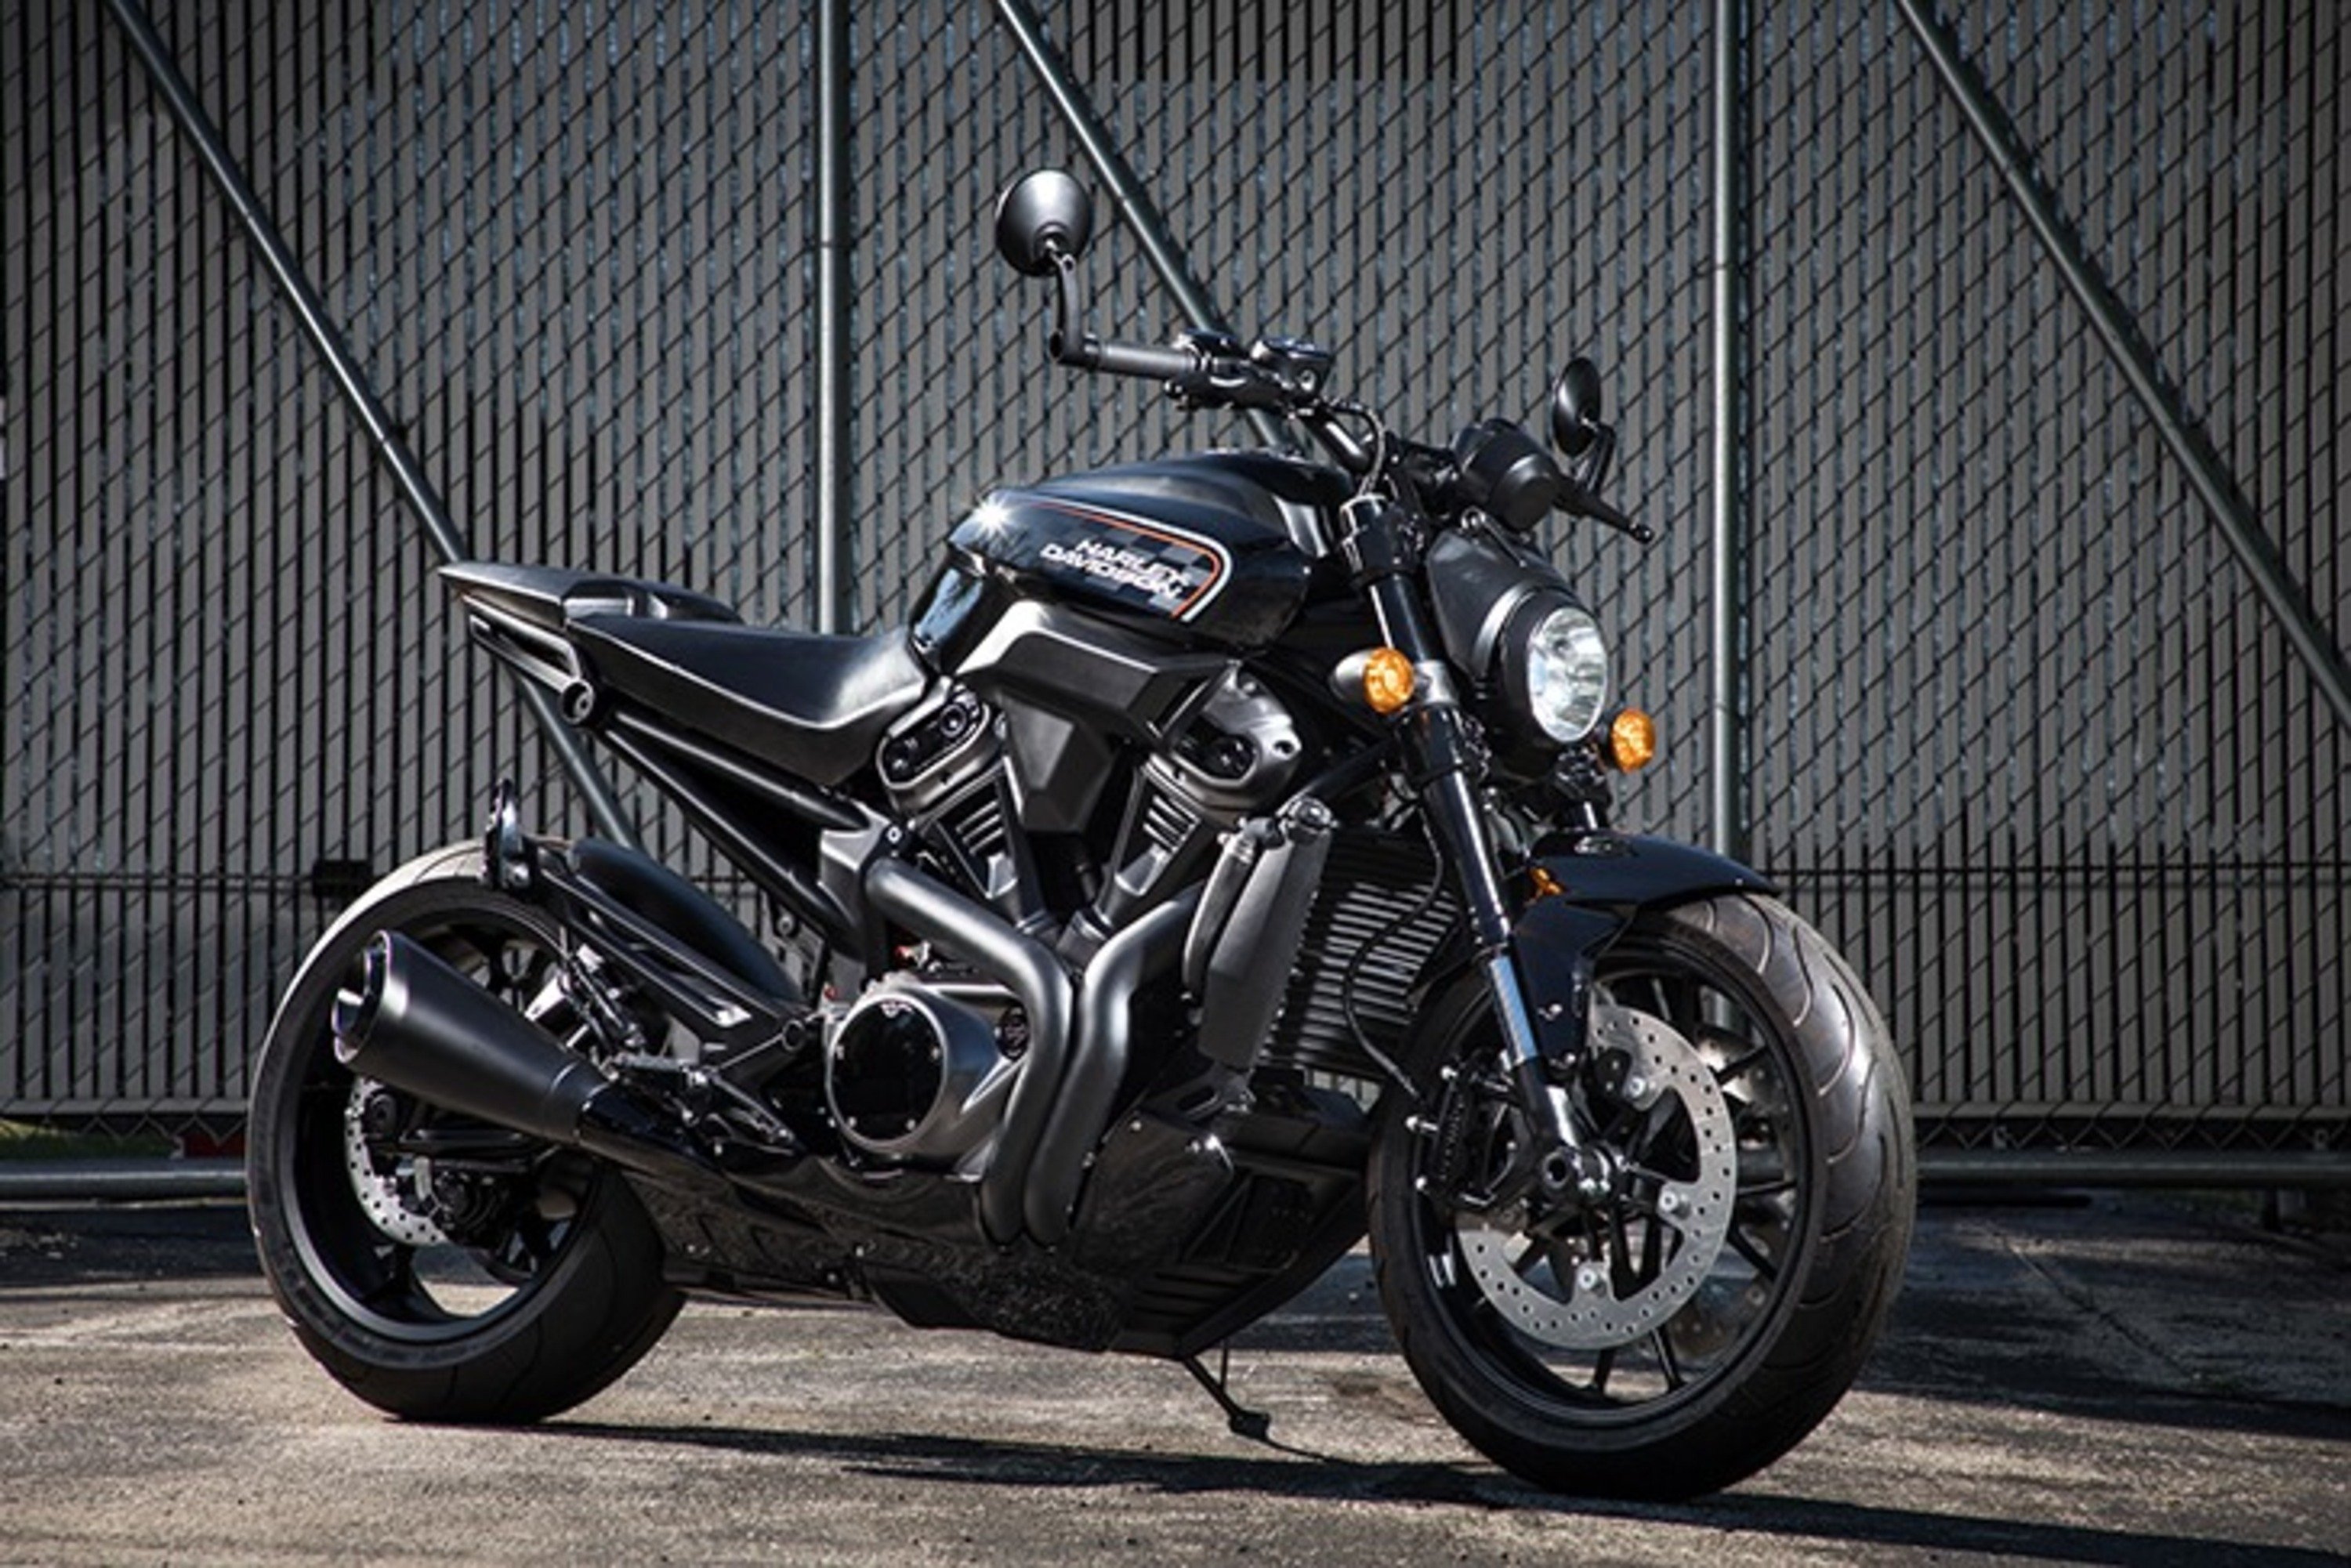 Mercato moto: Harley Davidson, vendite gi&ugrave; ma spinge decisa sul rinnovamento